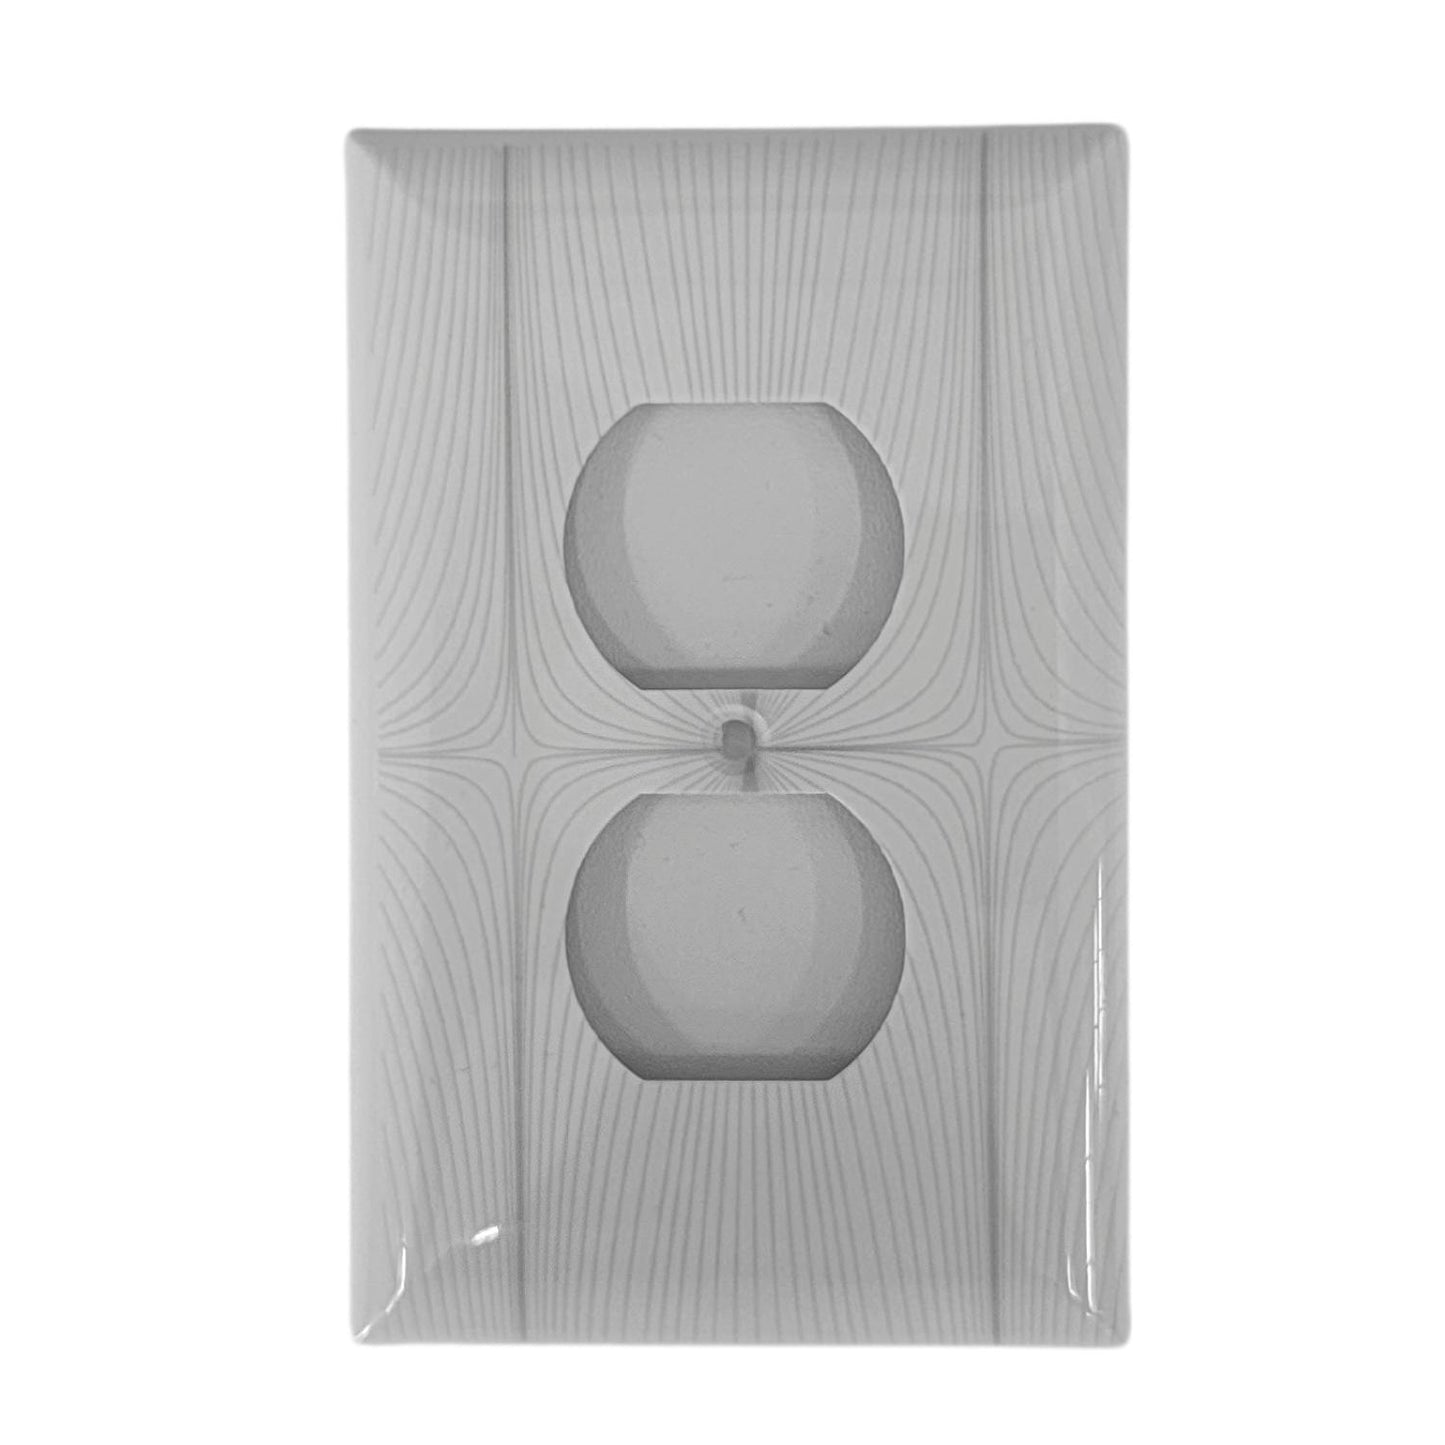 Geometric Design Single Duplex Outlet Cover Wall Plate White LA144-PWP11